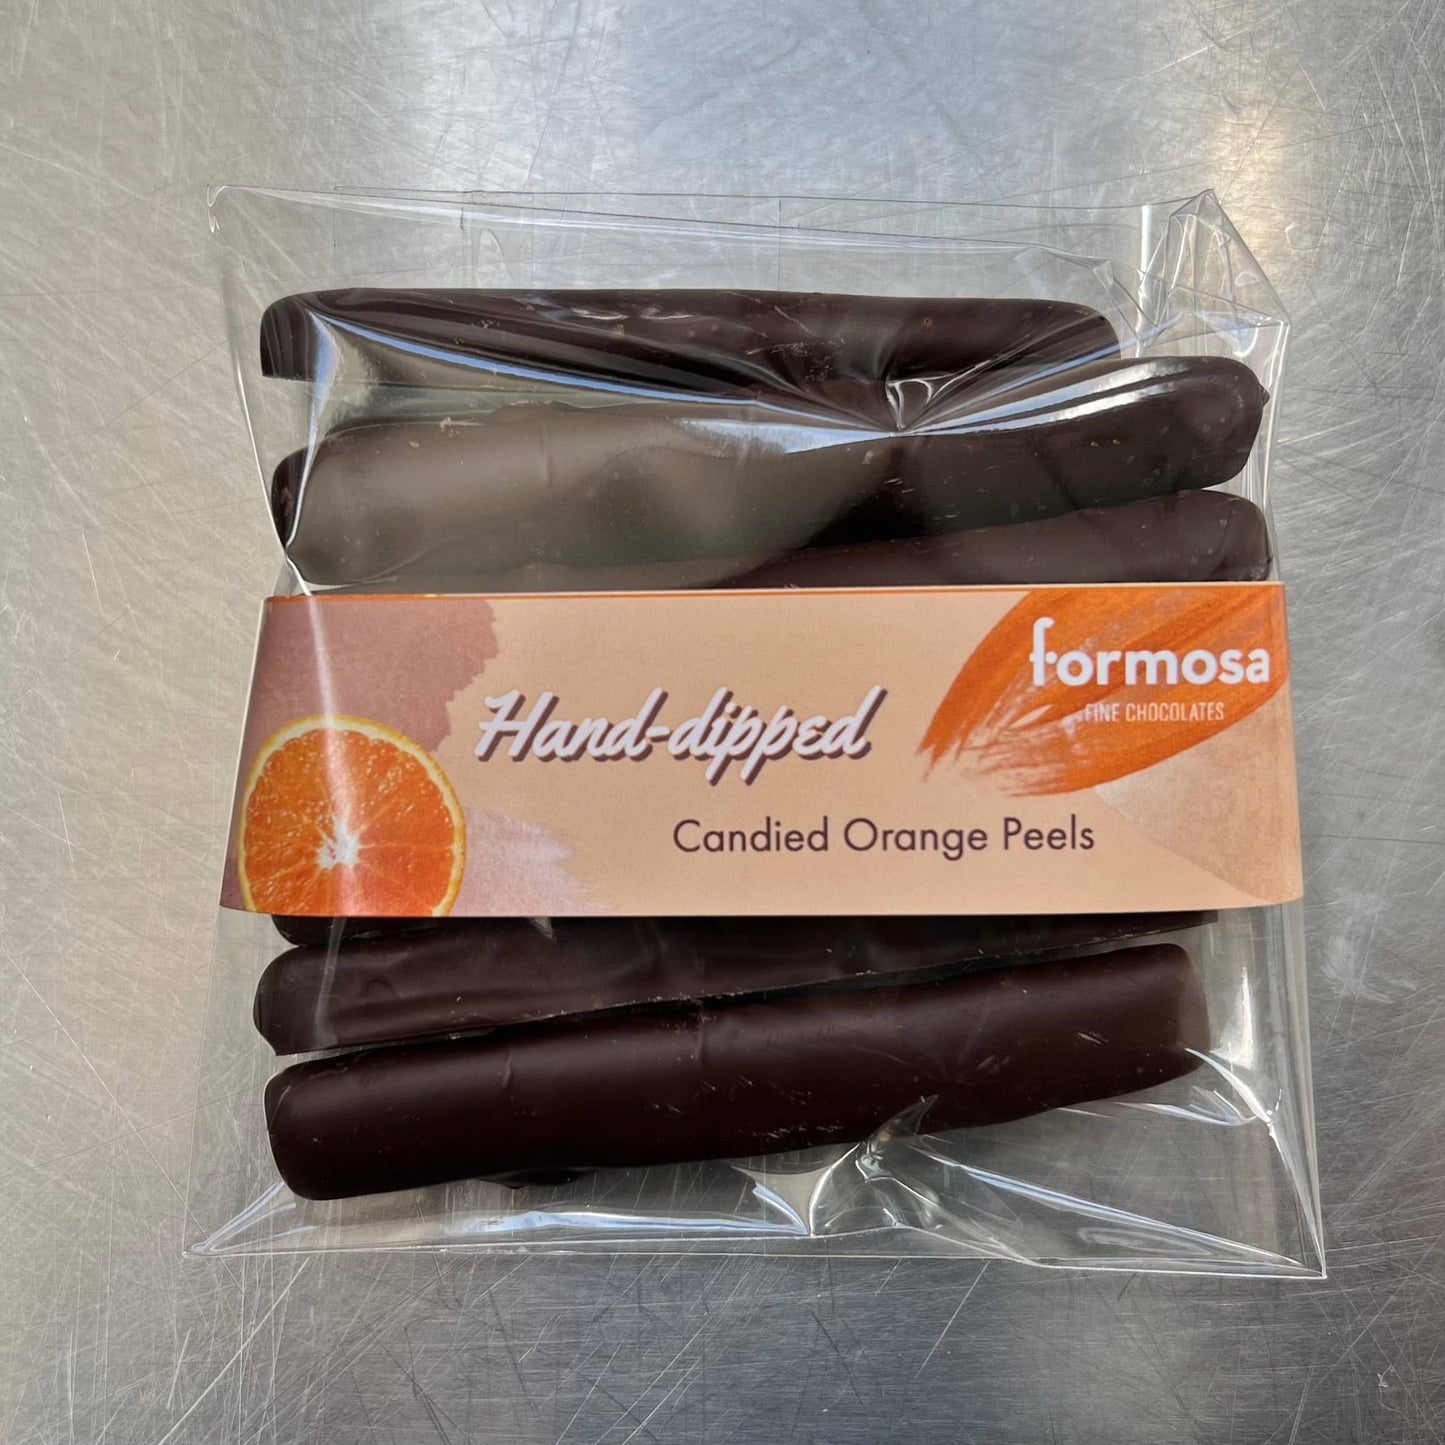 Chocolate-dipped candied orange peels